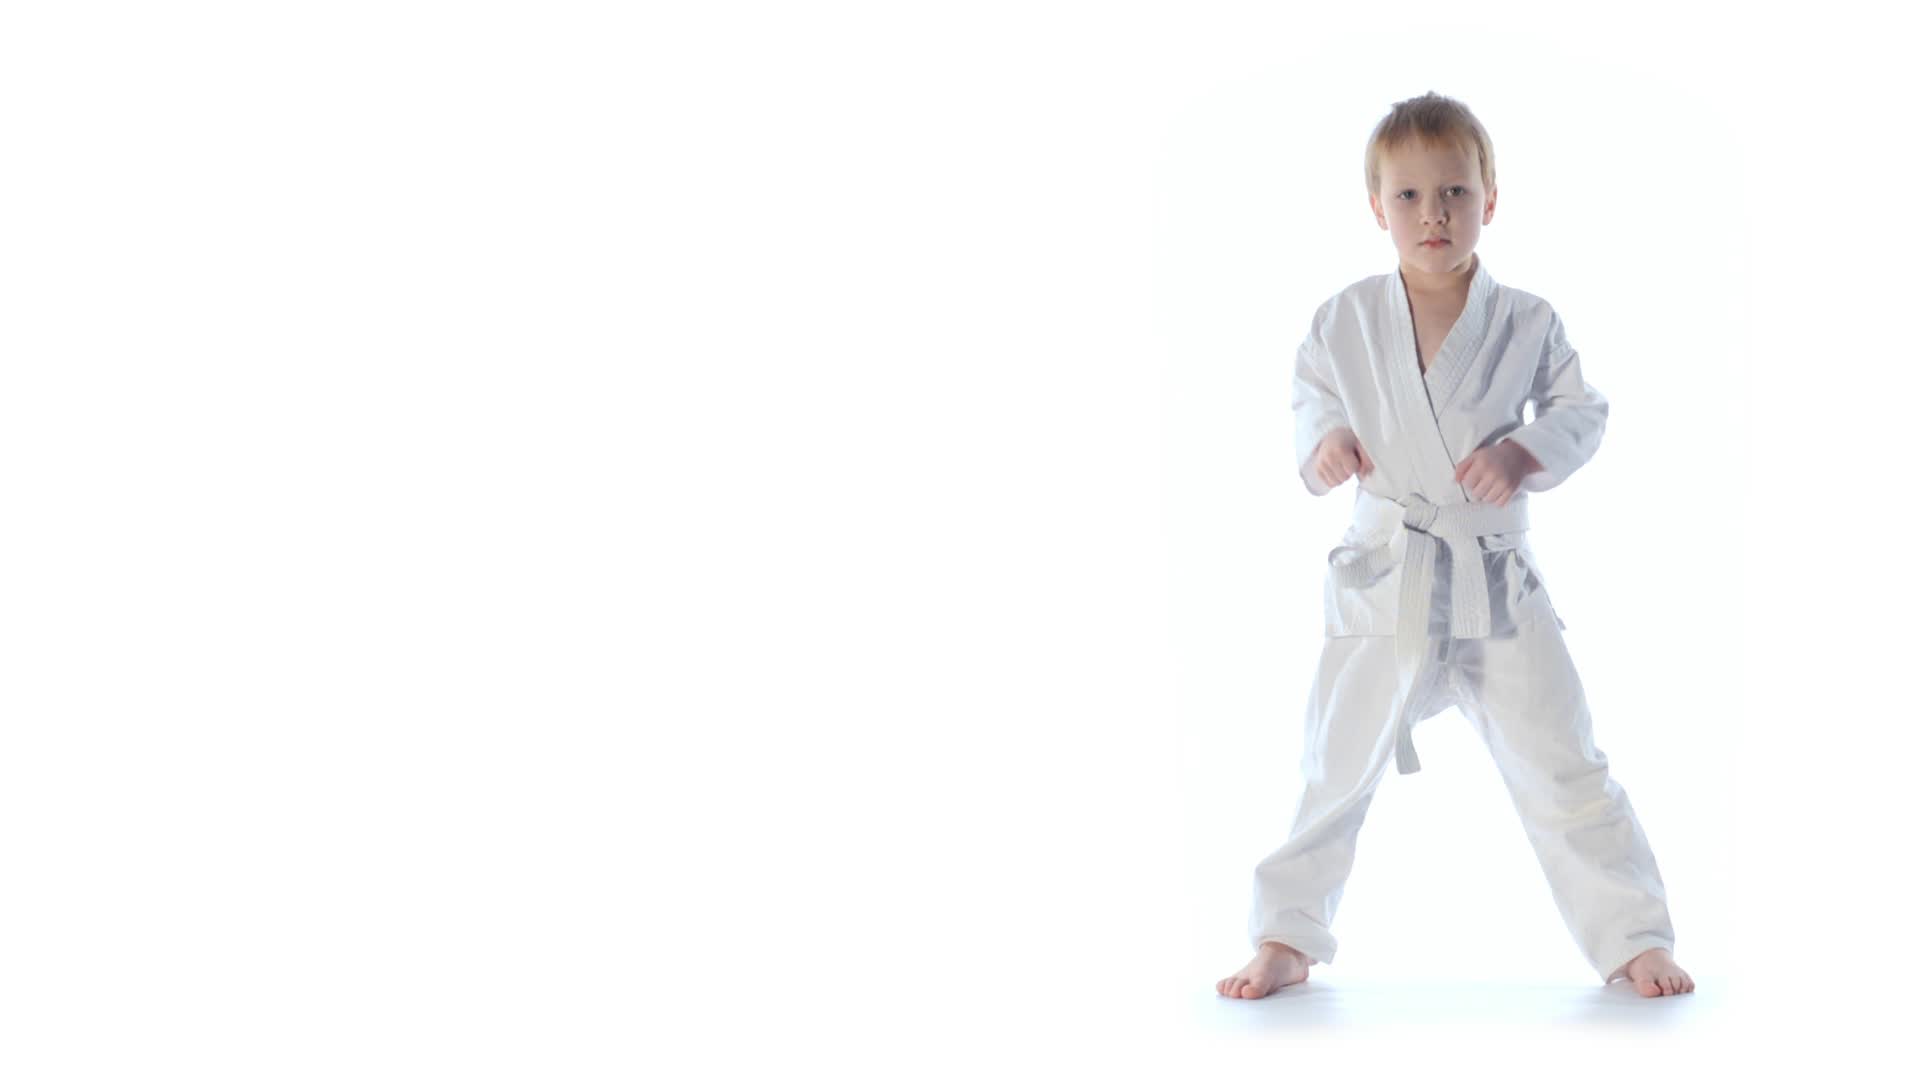 Video: Karate boy exercising isolated against white background ...